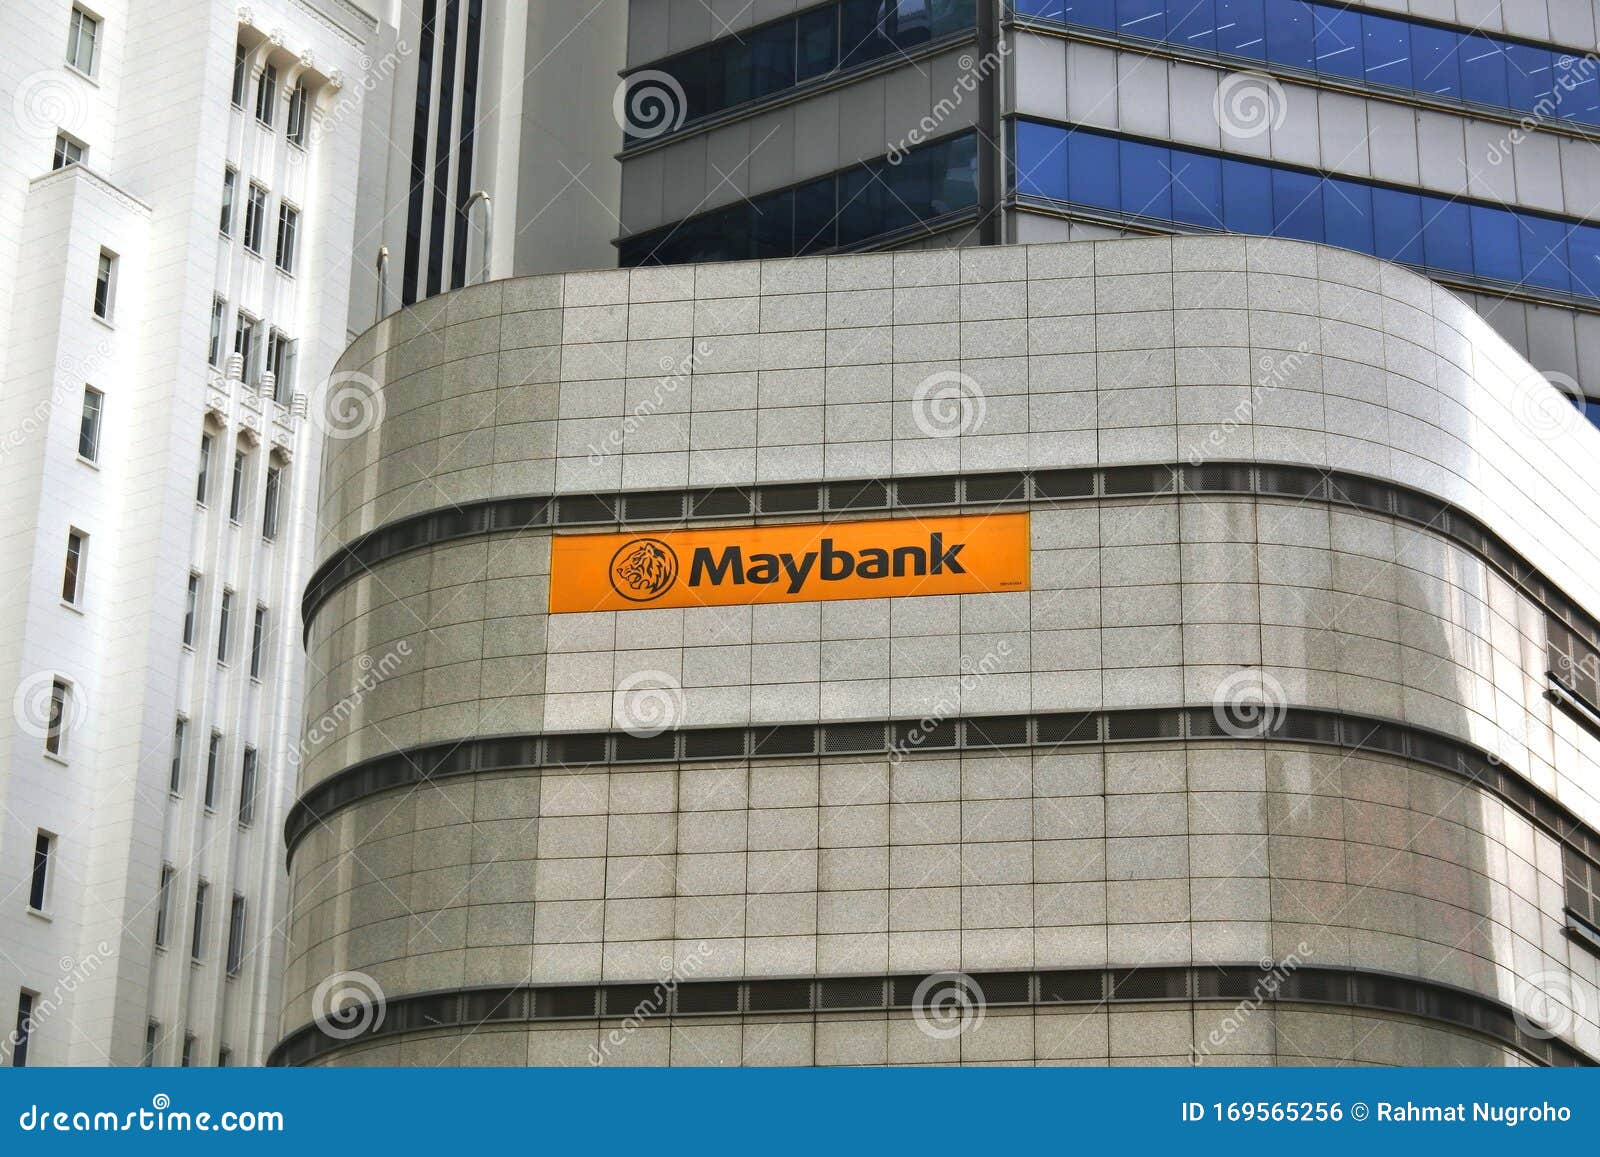 Maybank business account